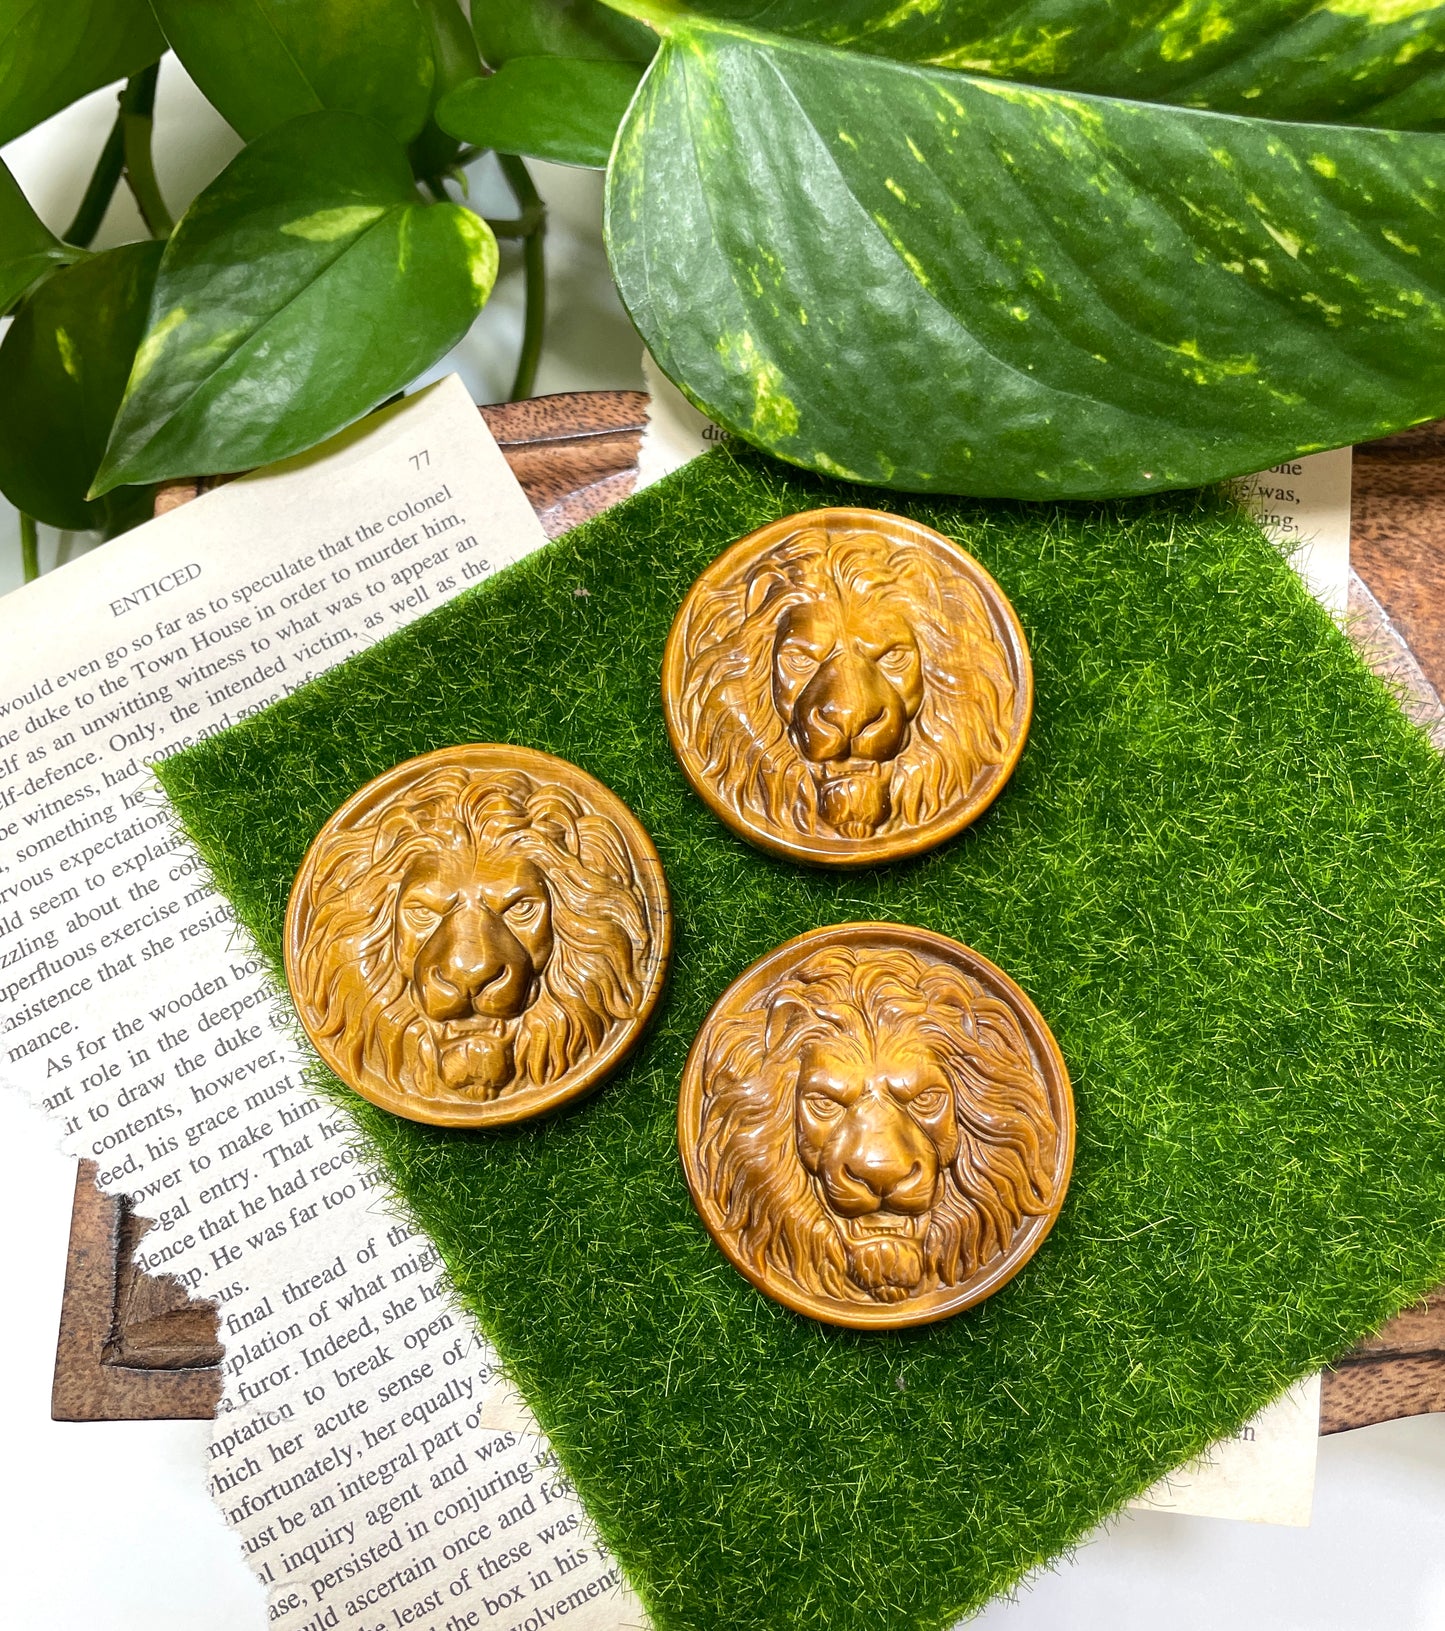 Tigers Eye Lion Medallion Carving